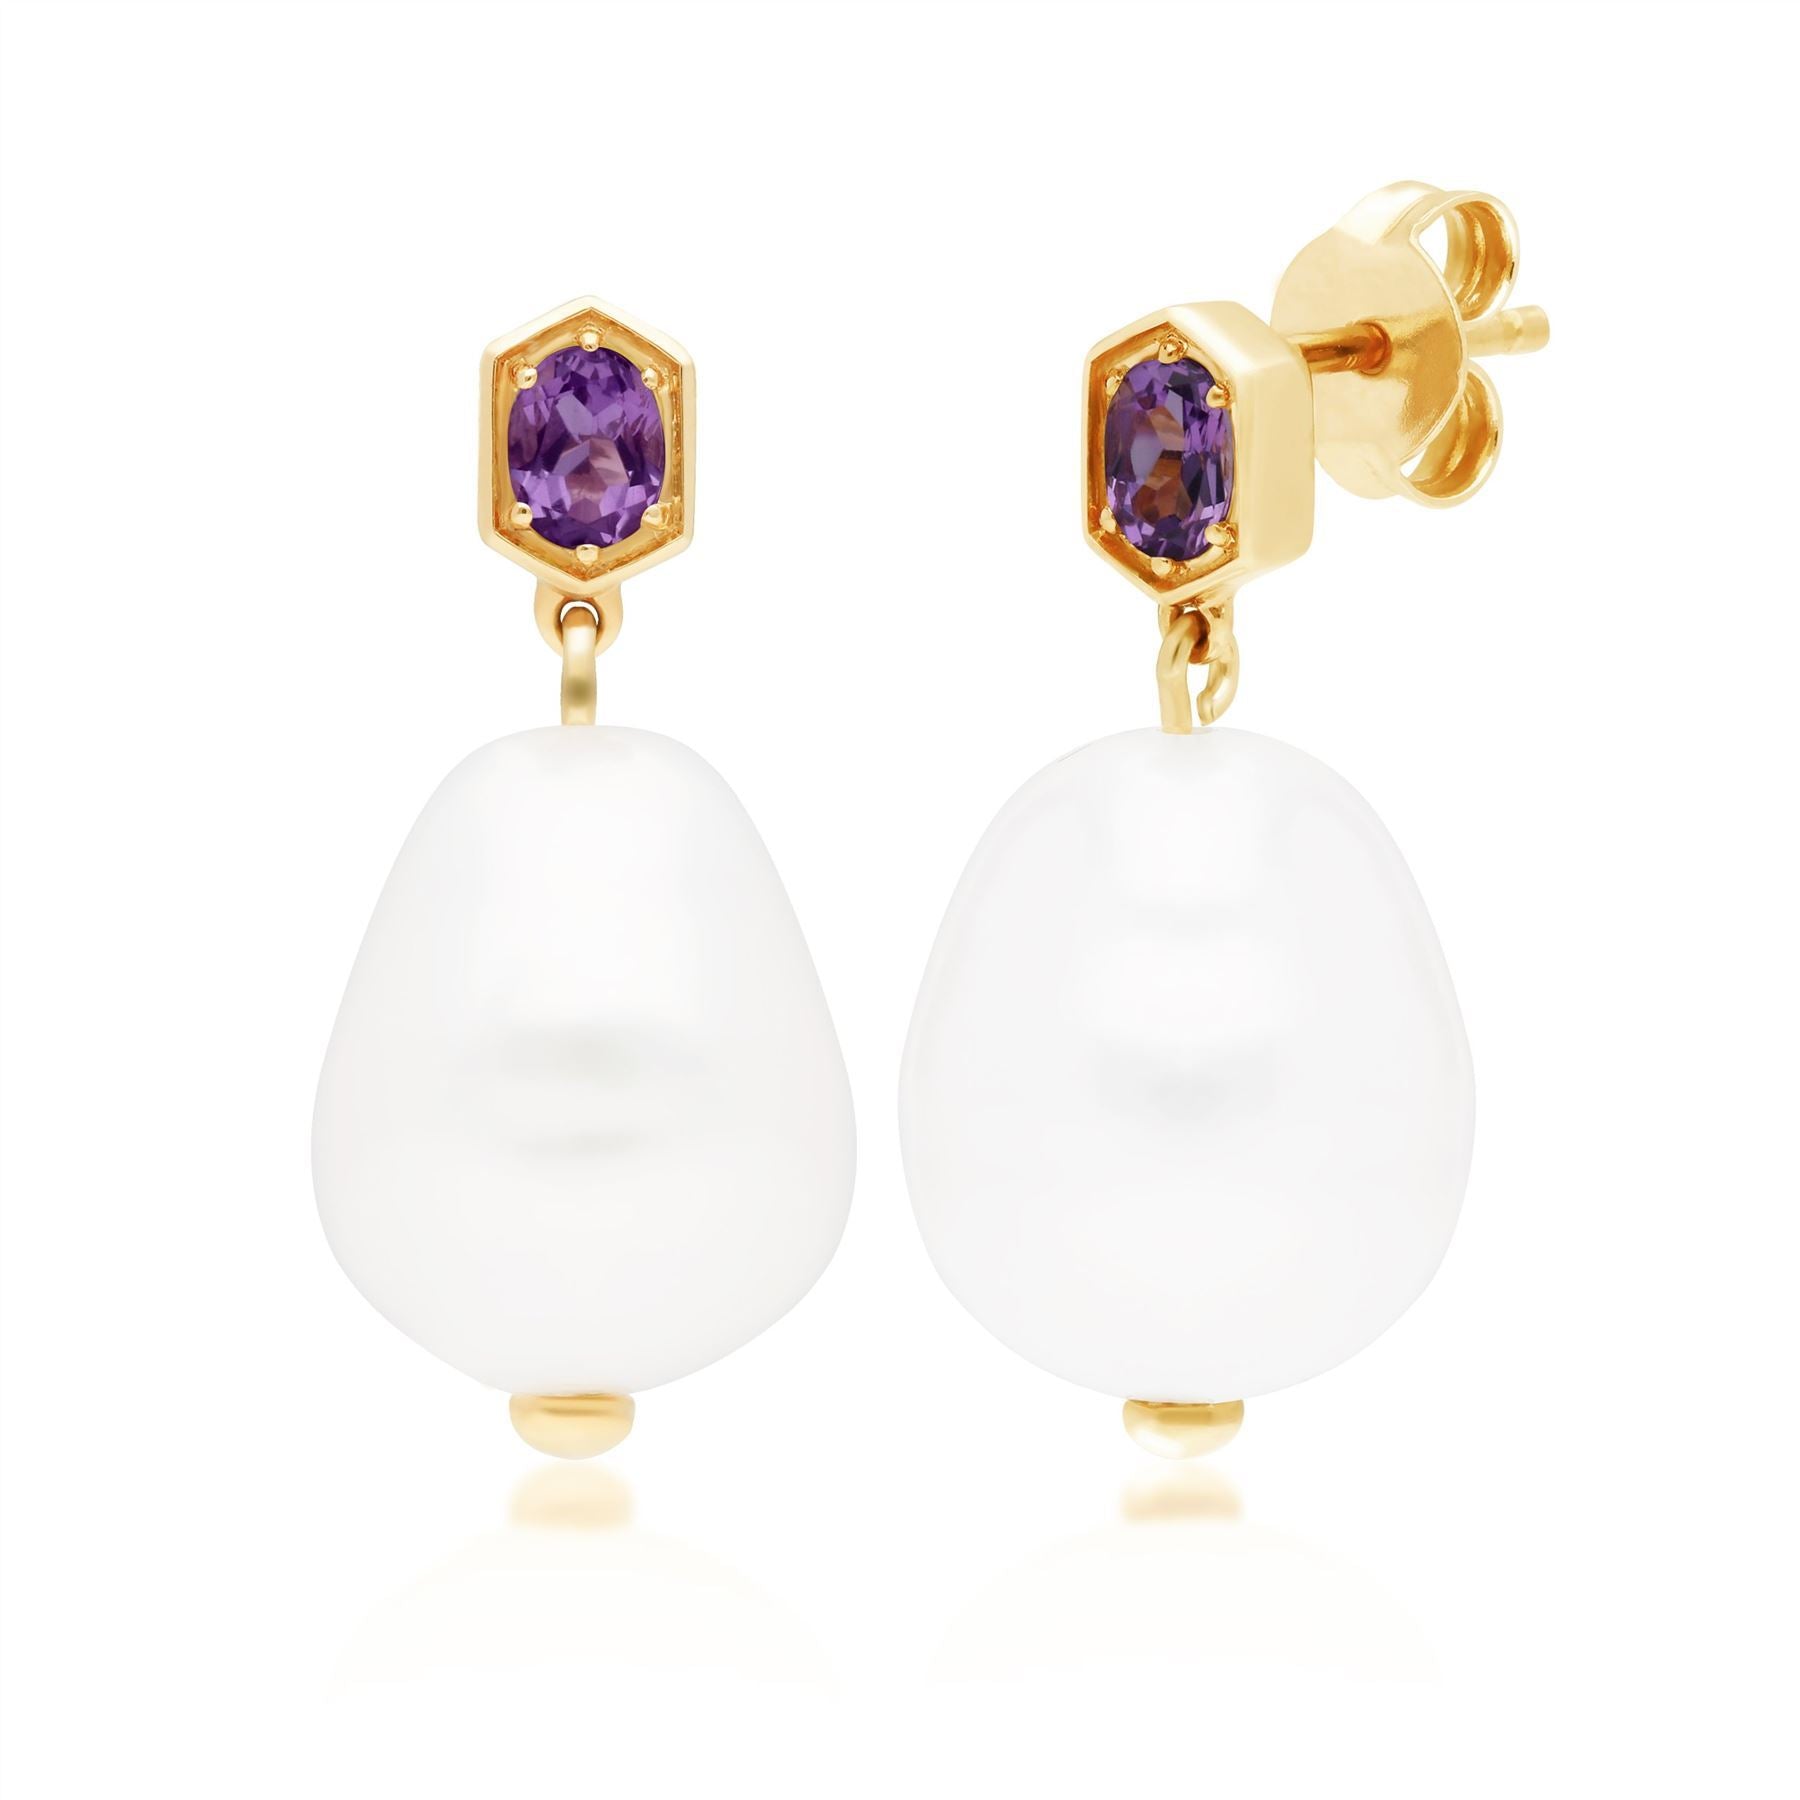 Modern Baroque Pearl & Amethyst Drop Earrings in Gold Plated Sterling Silver